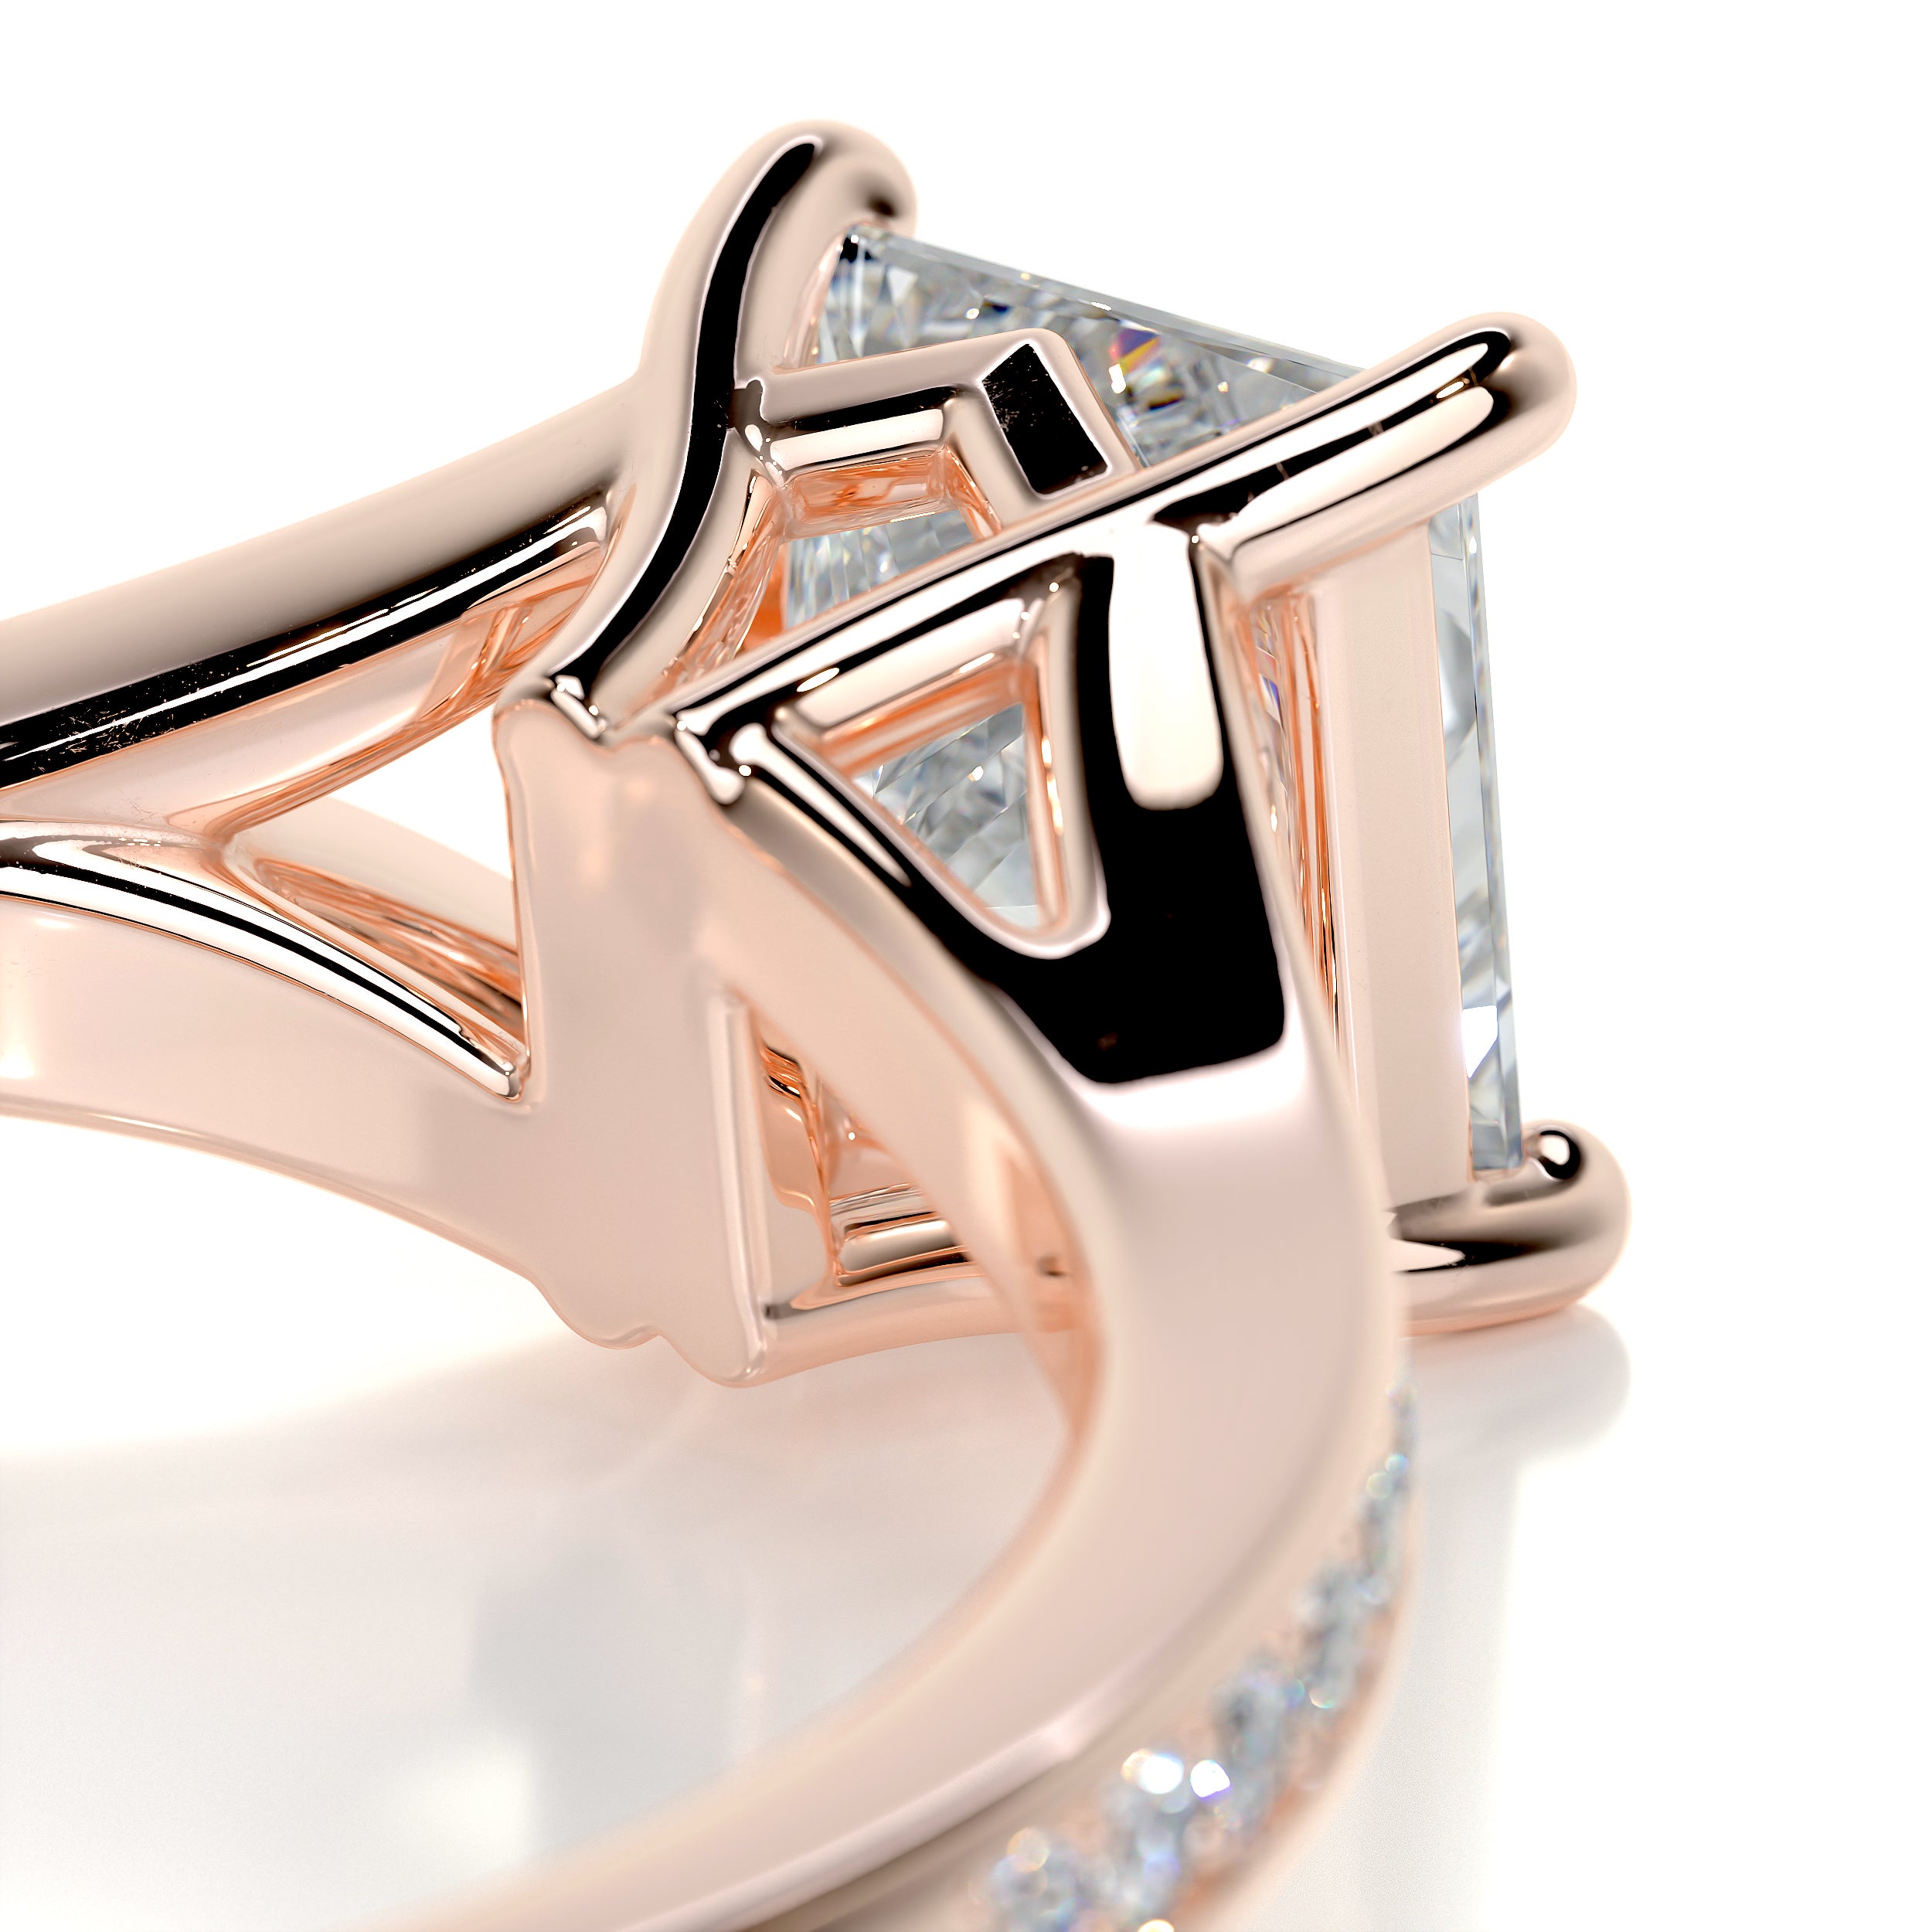 Alexandria Diamond Engagement Ring   (1.15 Carat) -14K Rose Gold